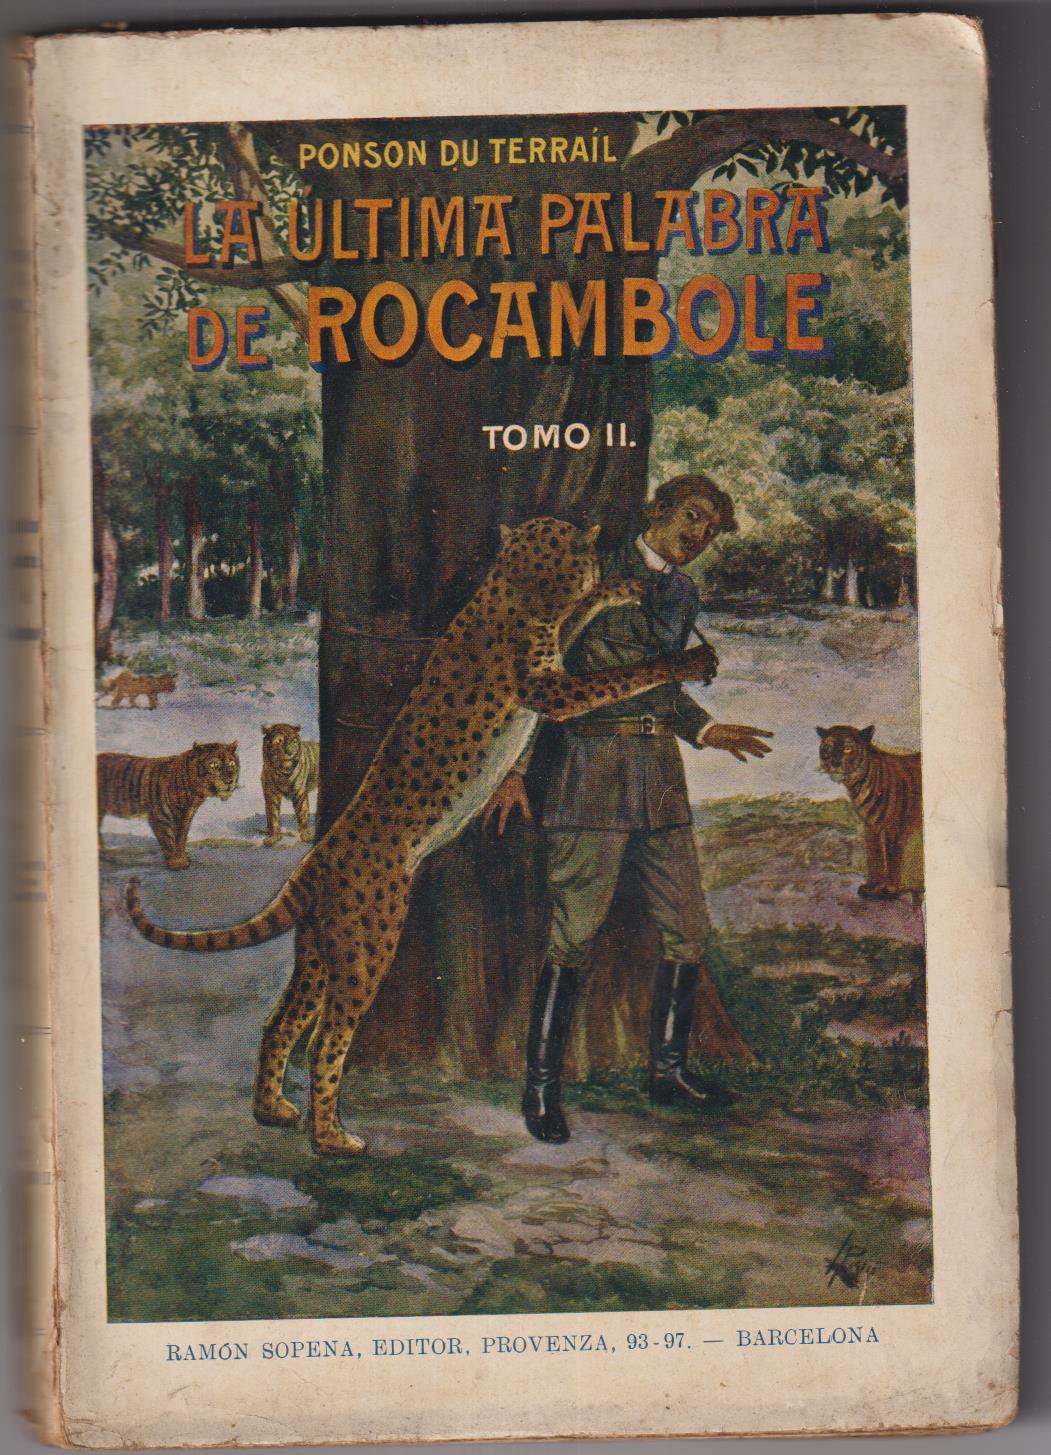 Ponson du Terrail. La última palabra de rocambole. Tomo II. Bibl. de Grandes Novelas, 1930